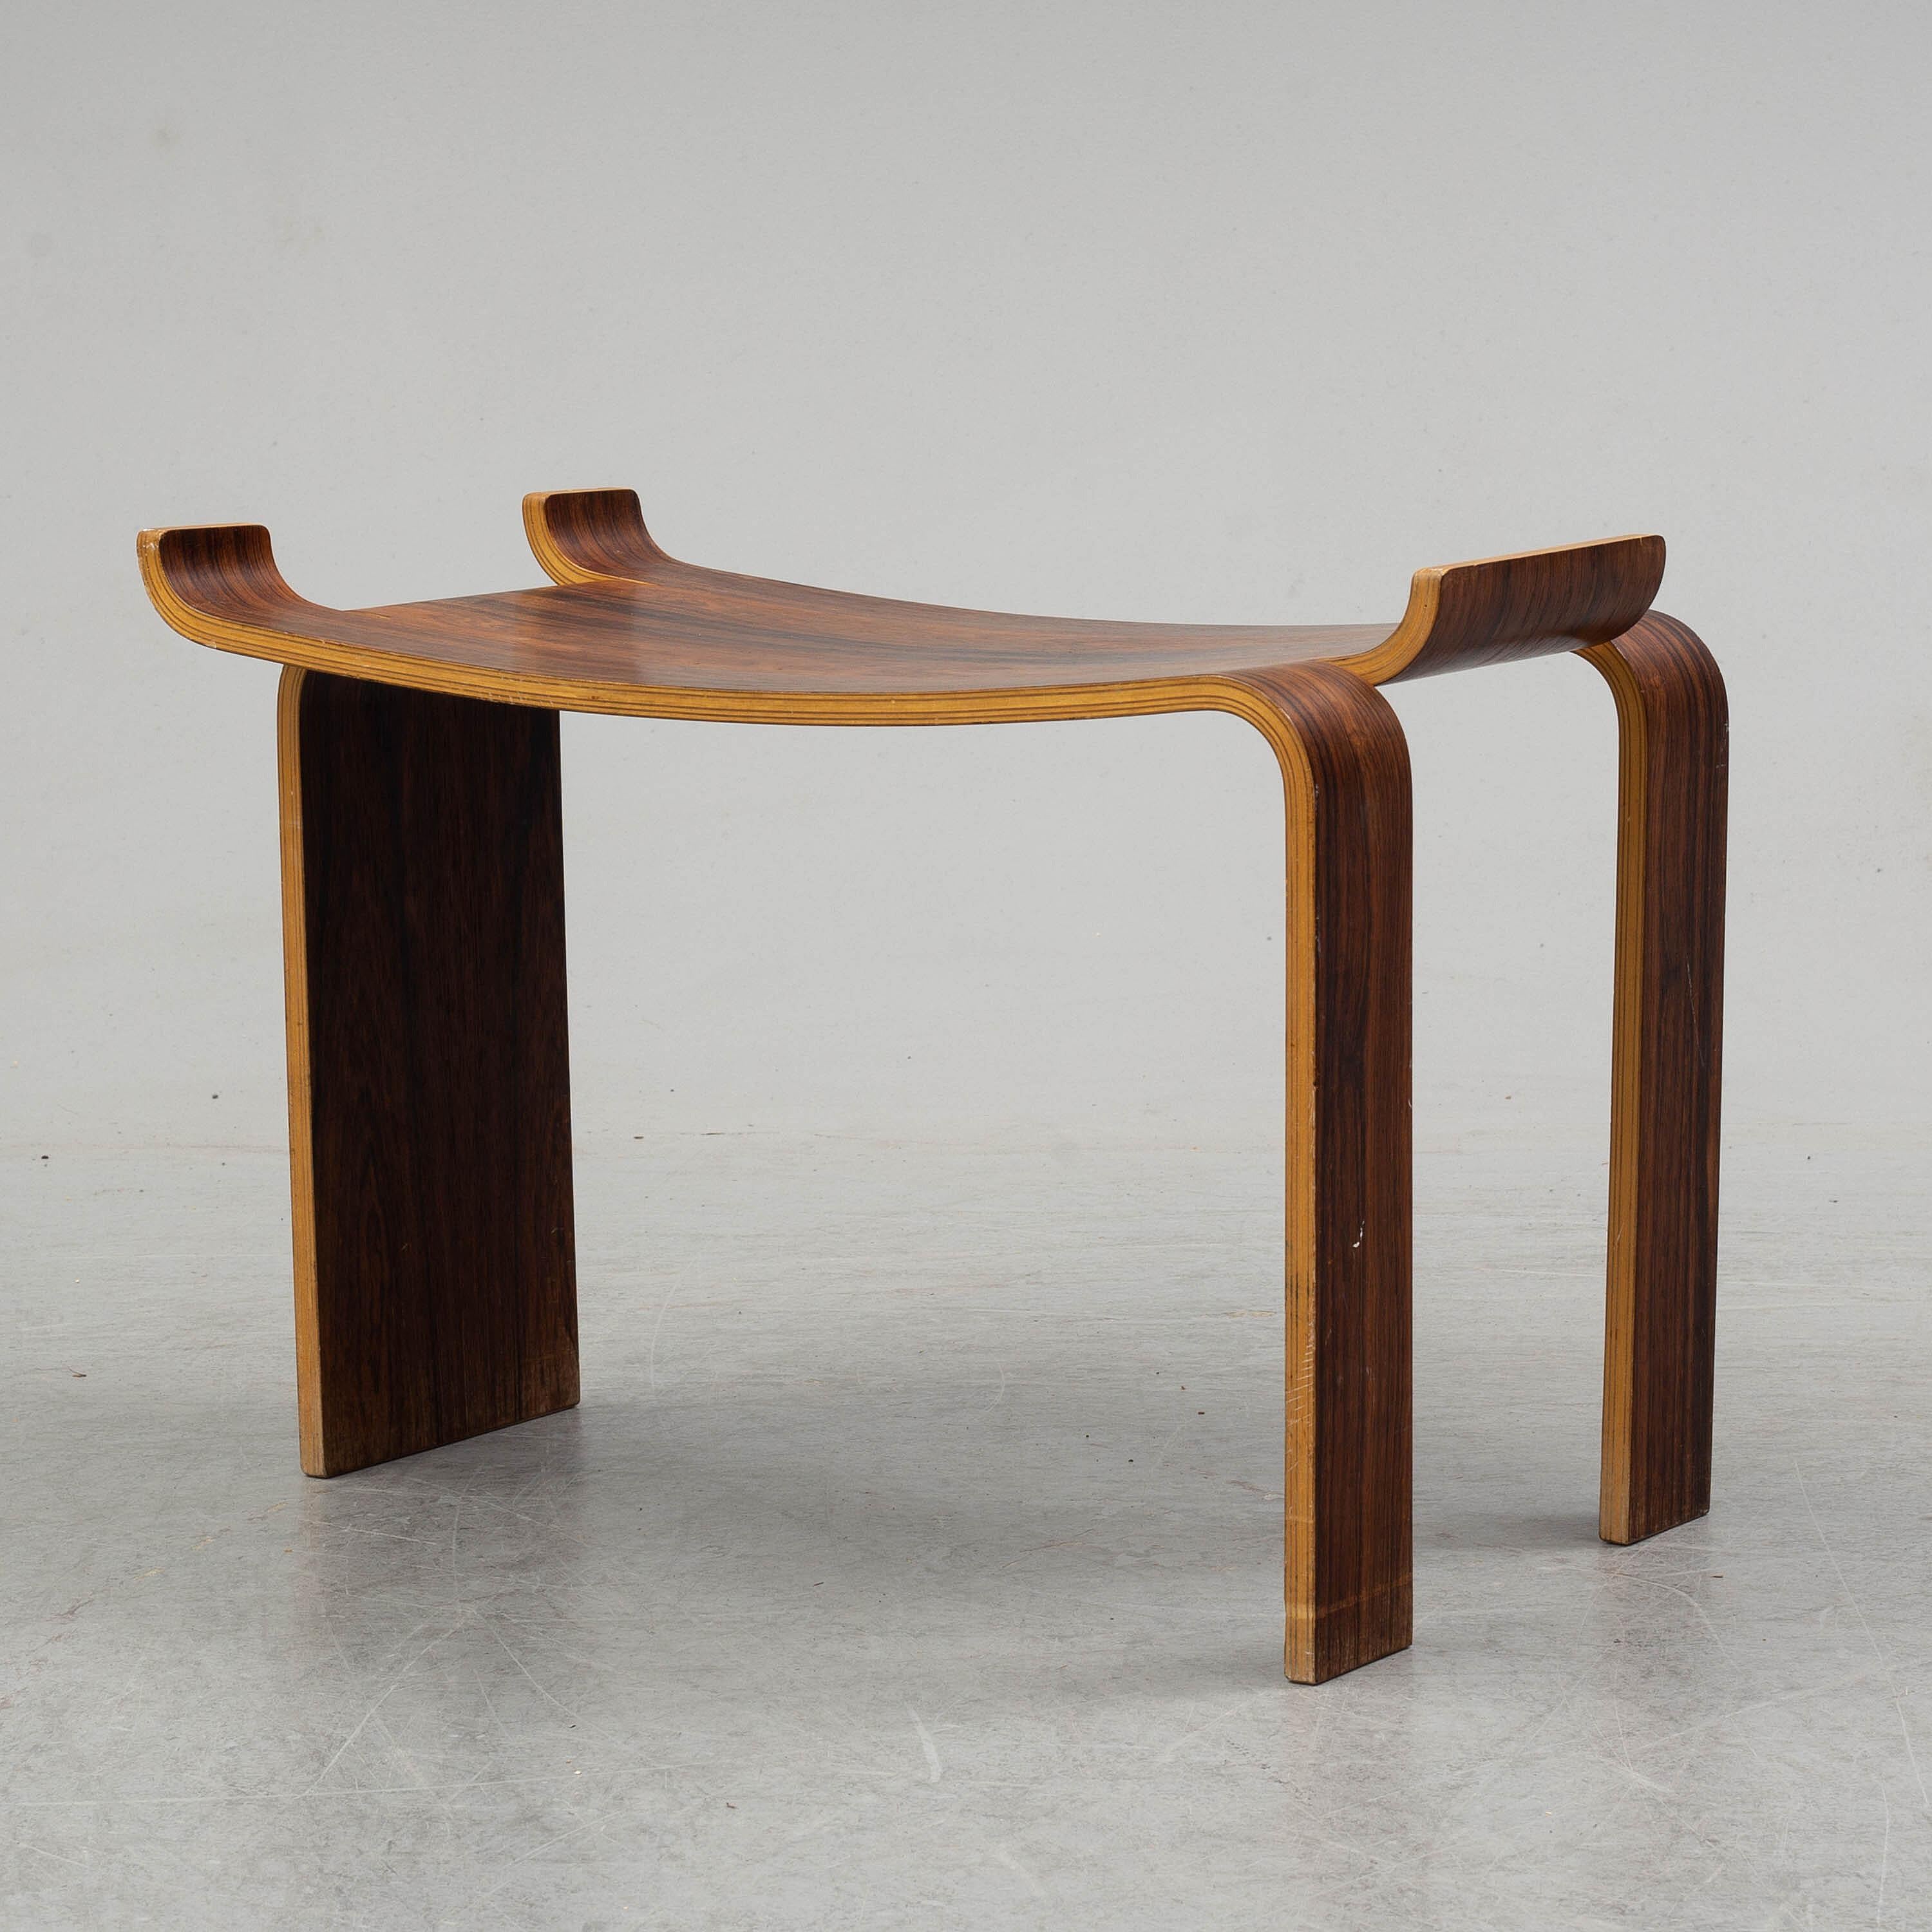 Molded one-piece rosewood stool or side table designed by Kai Lyngfeldt Larsen for Swedish Liljevalchs in 1964.